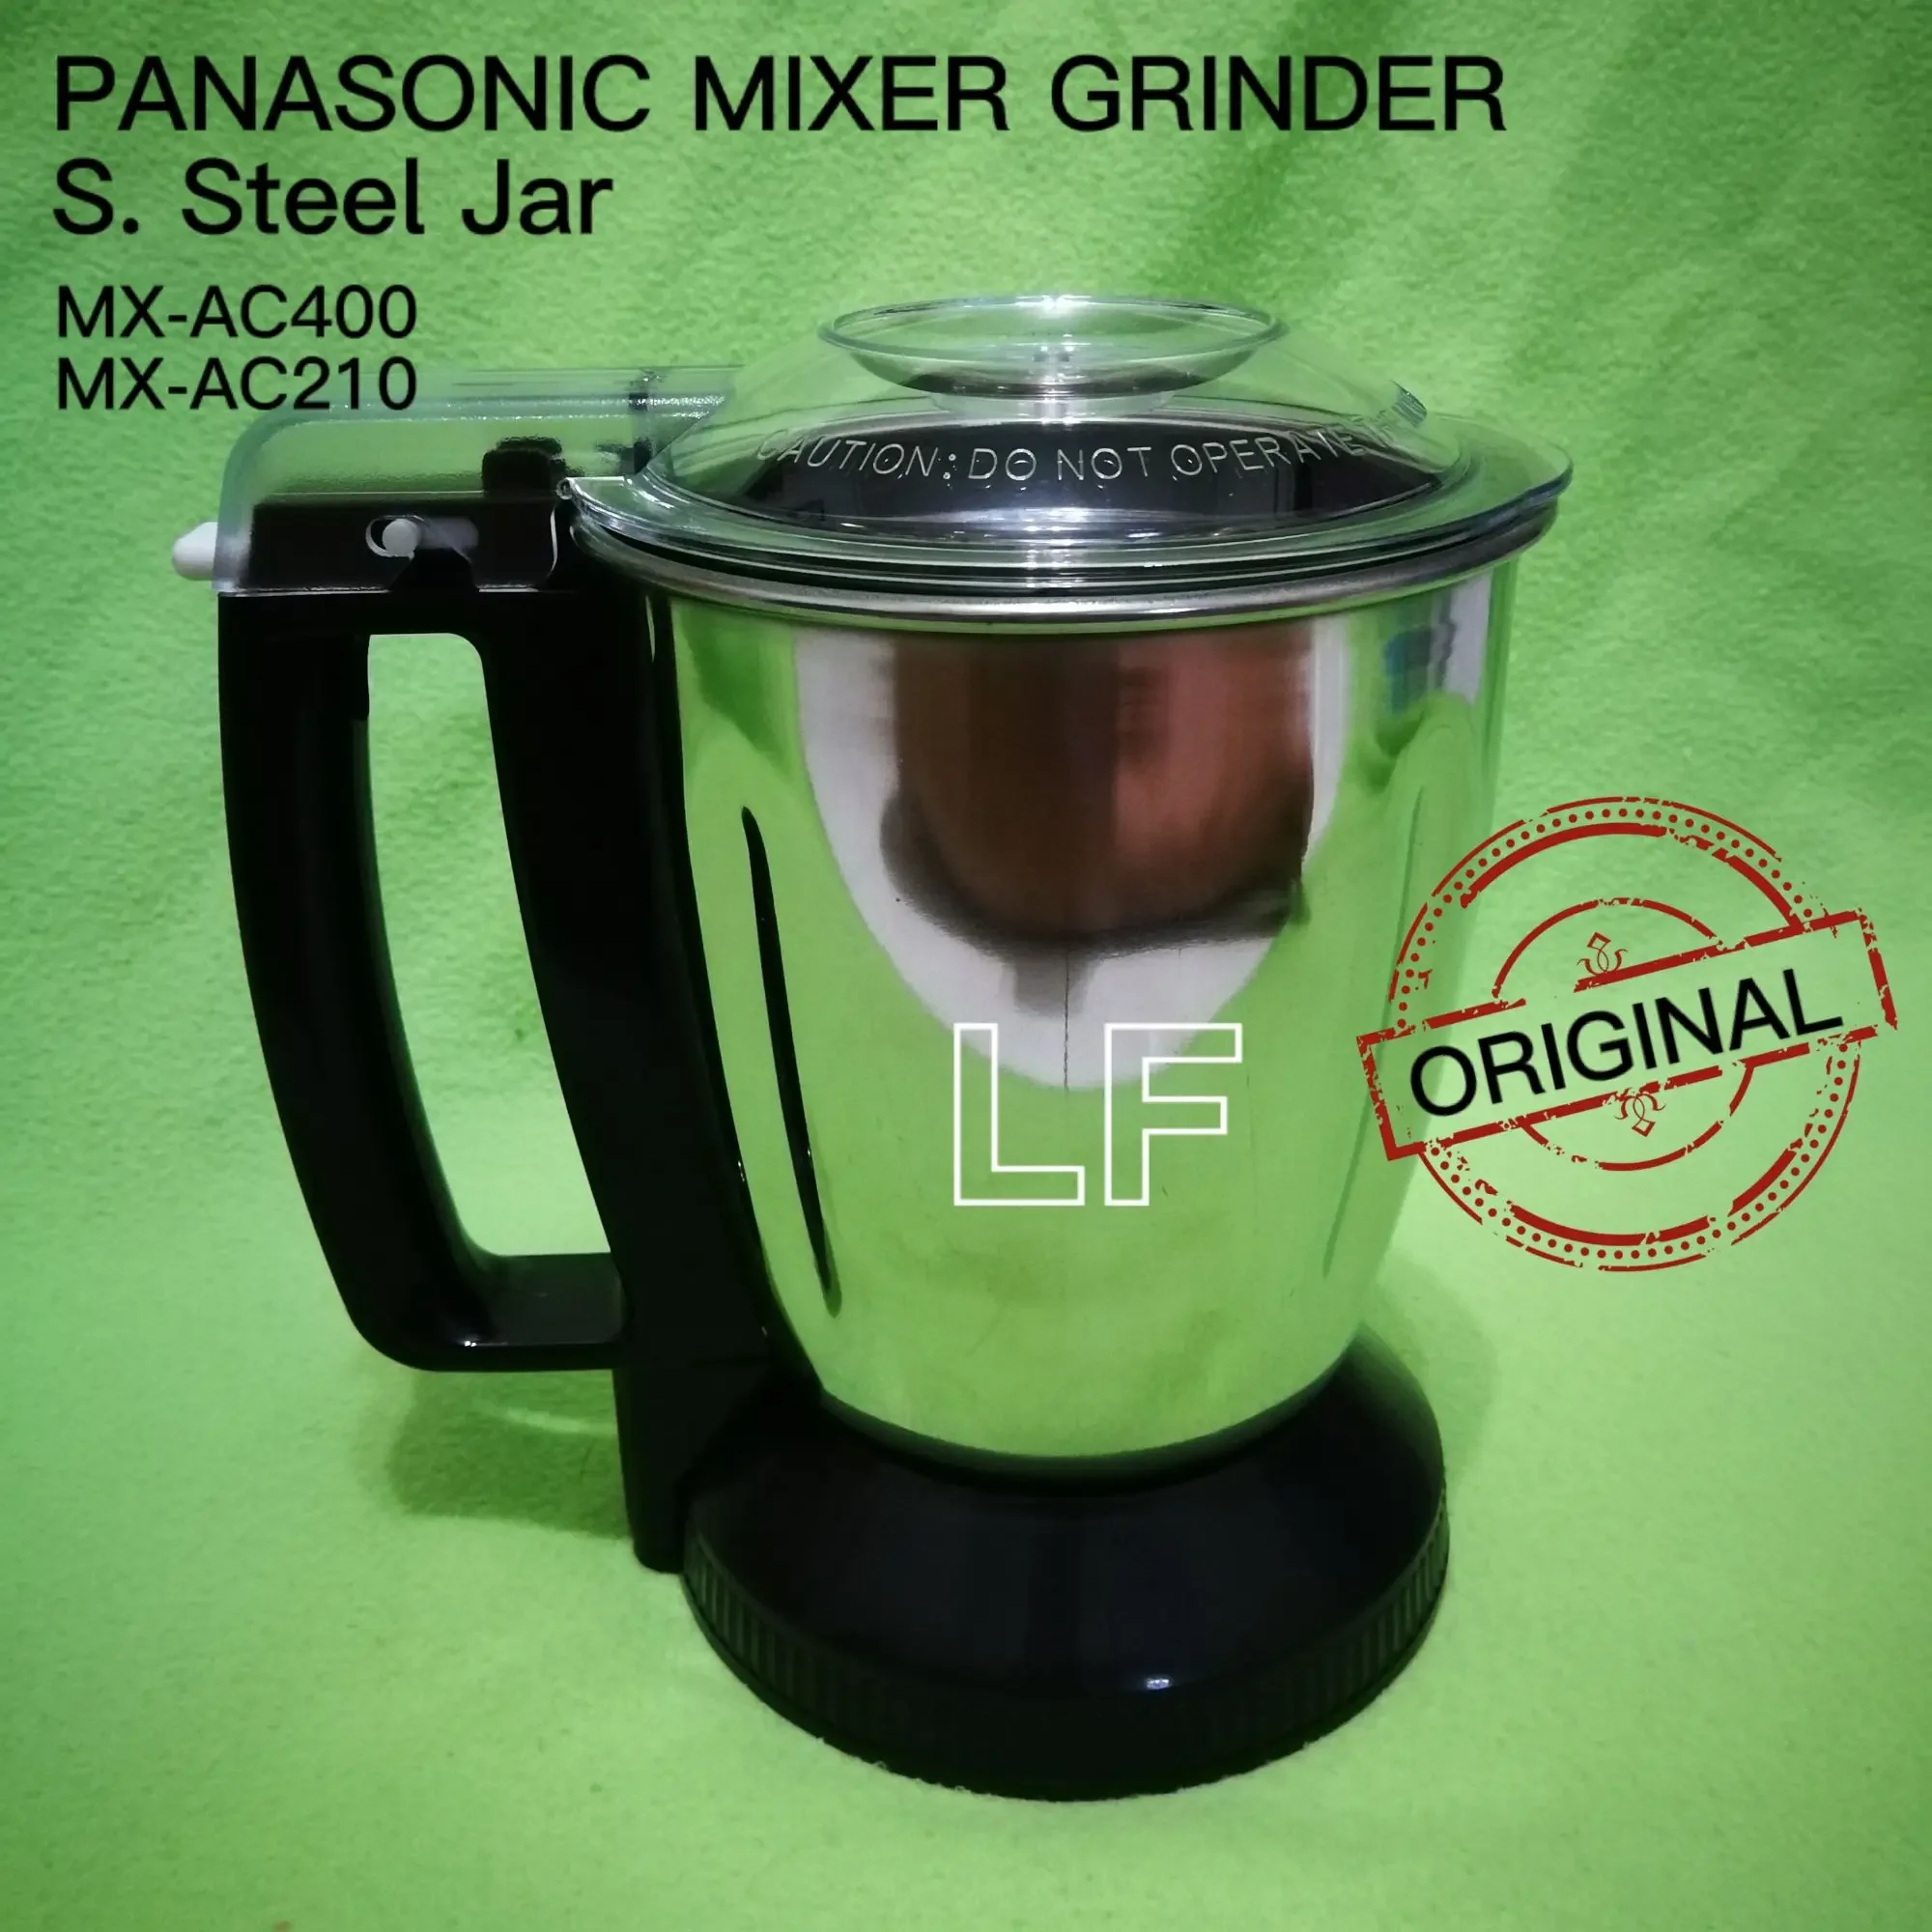 [SPARE PART]PANASONIC 4 JARS MIXER GRINDER MX-AC400 / MX-AC210S ORIGINAL SPARE PART